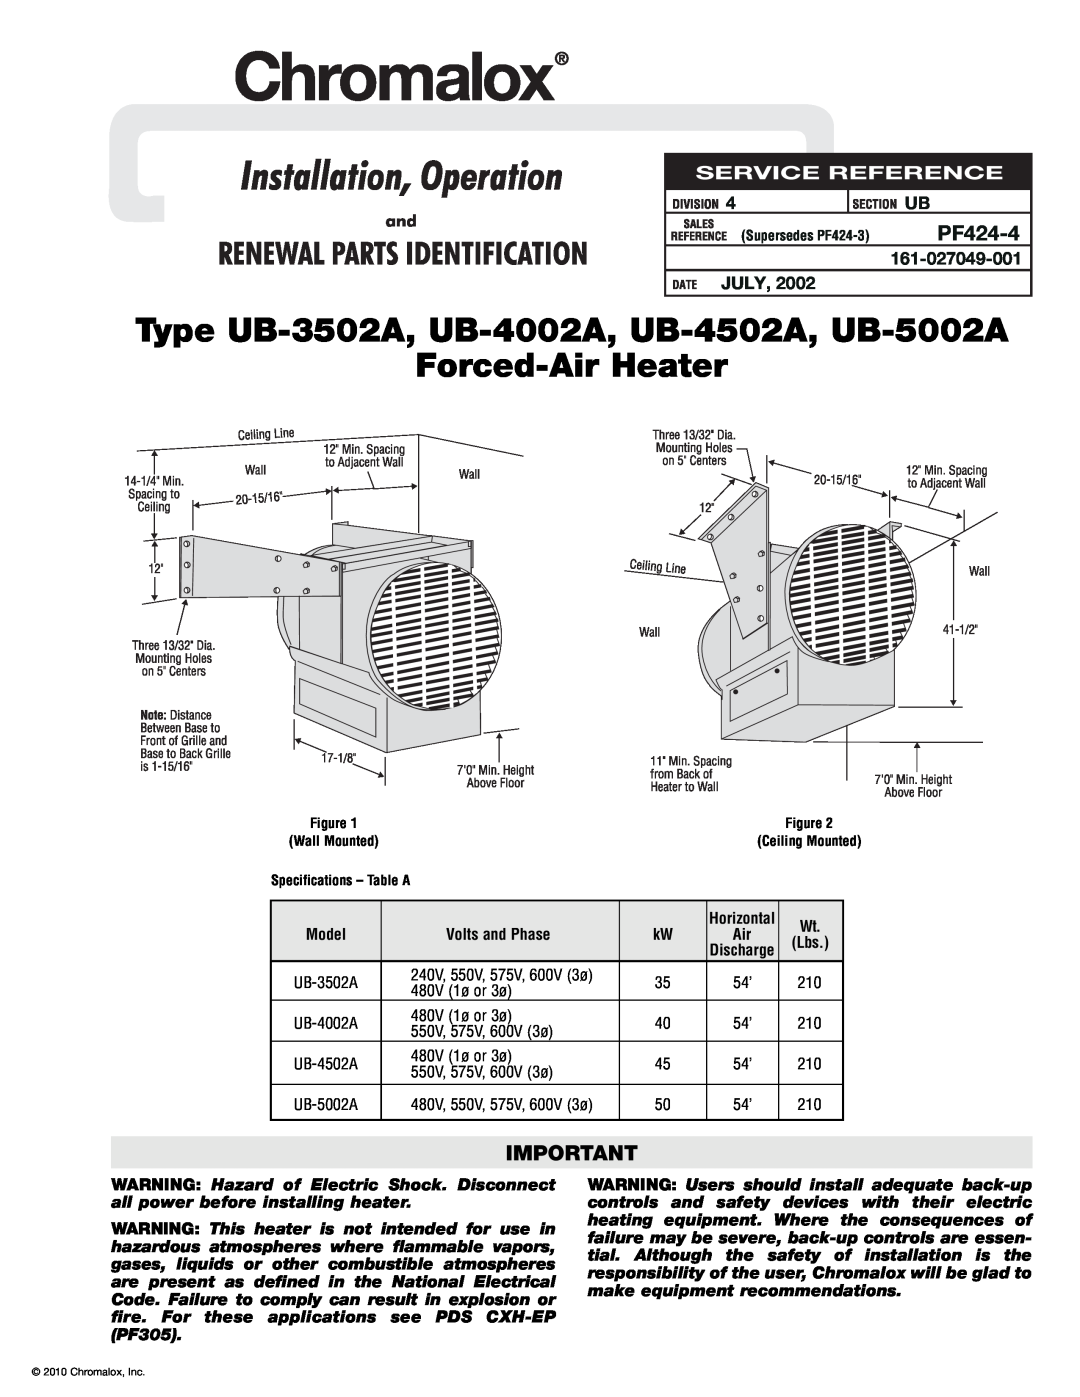 Chromalox specifications PF424-4, Type UB-3502A, UB-4002A, UB-4502A, UB-5002A, Forced-AirHeater 